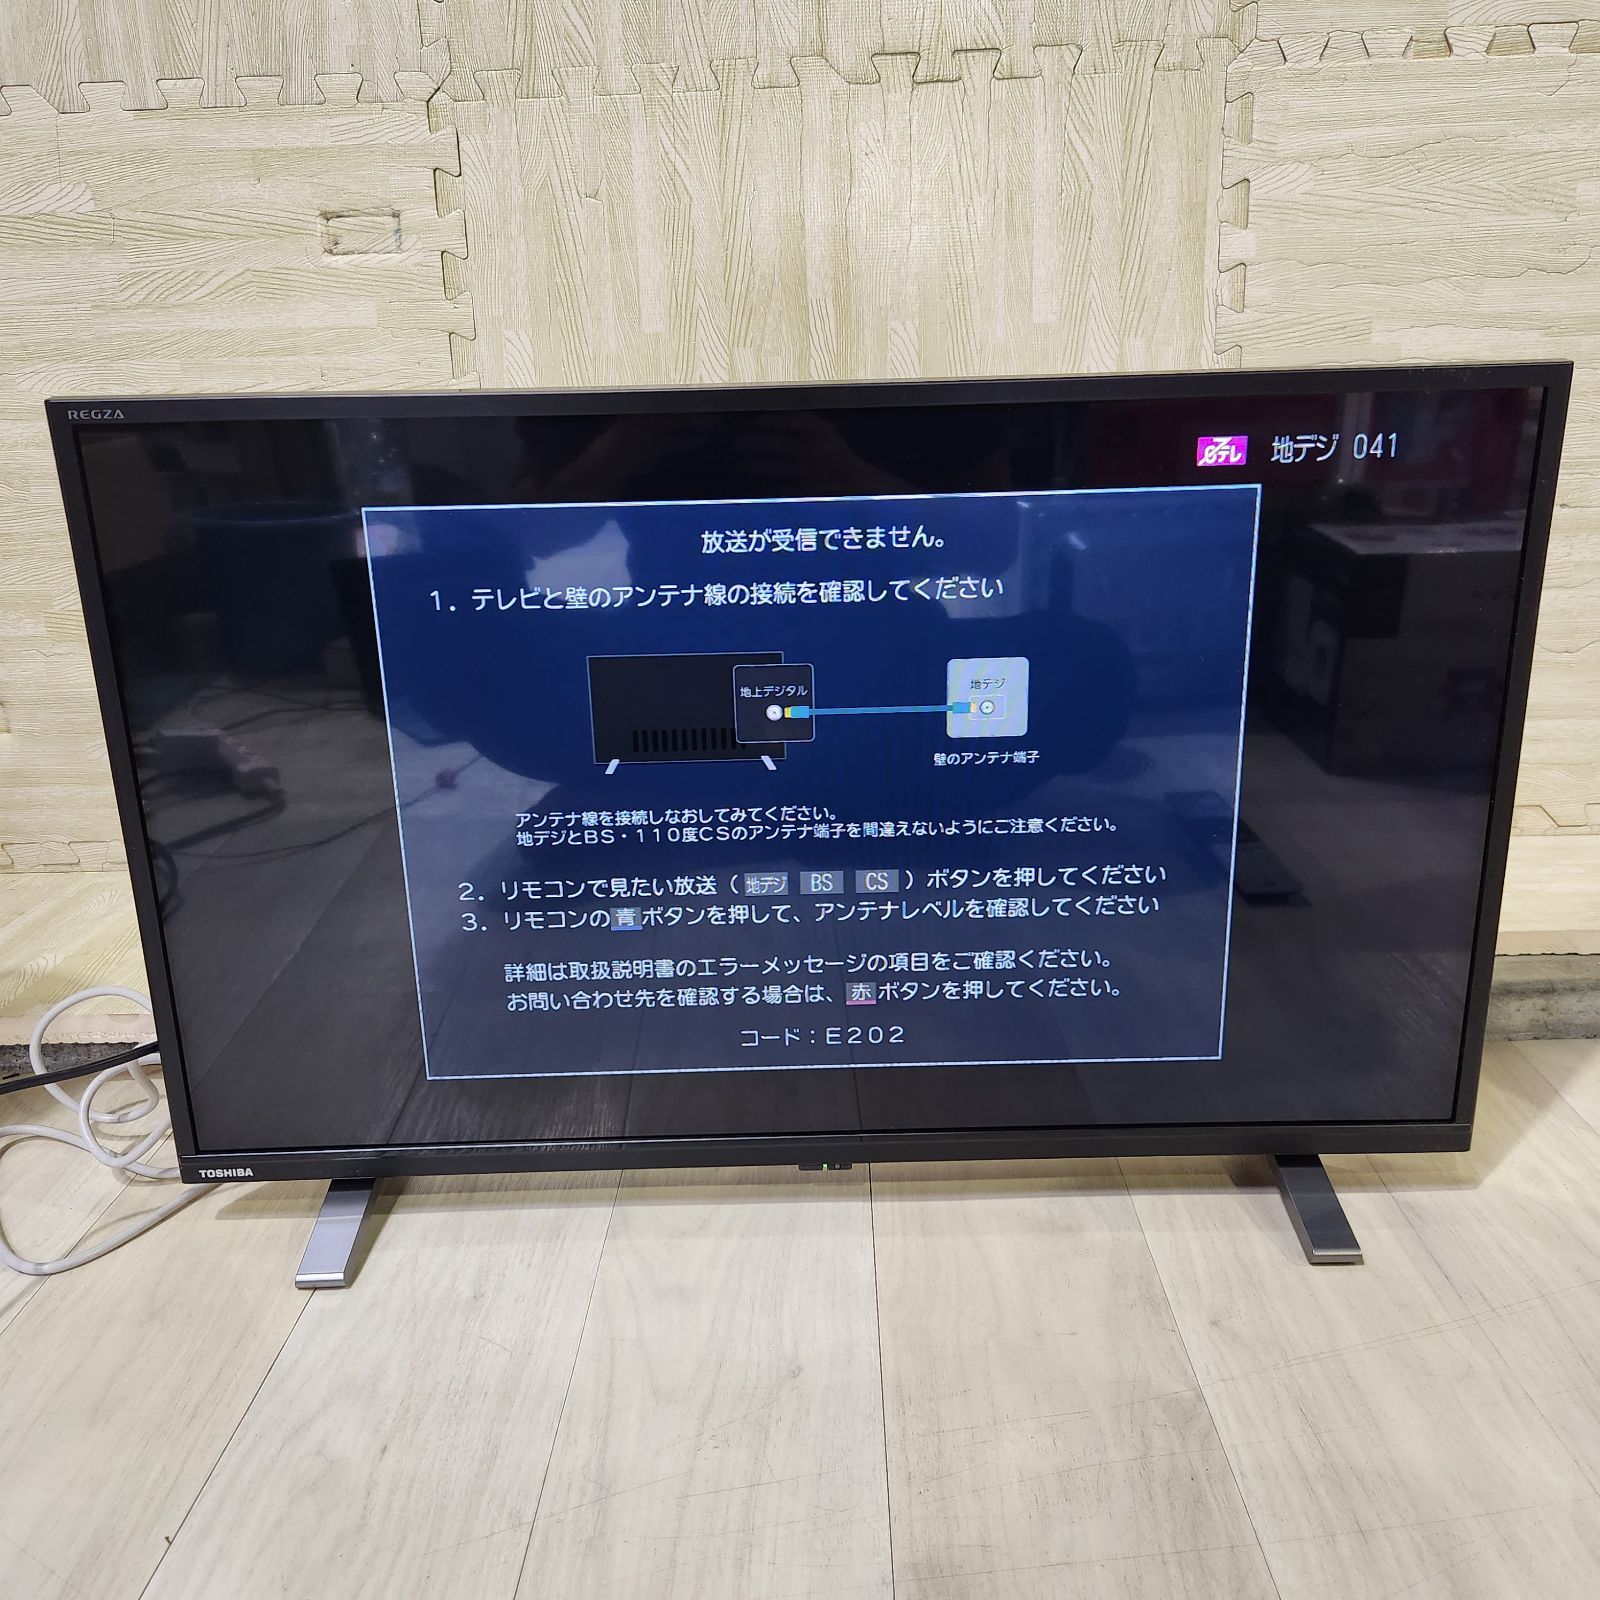 TOSHIBA 液晶テレビ REGZA 32型 32V34 - テレビ